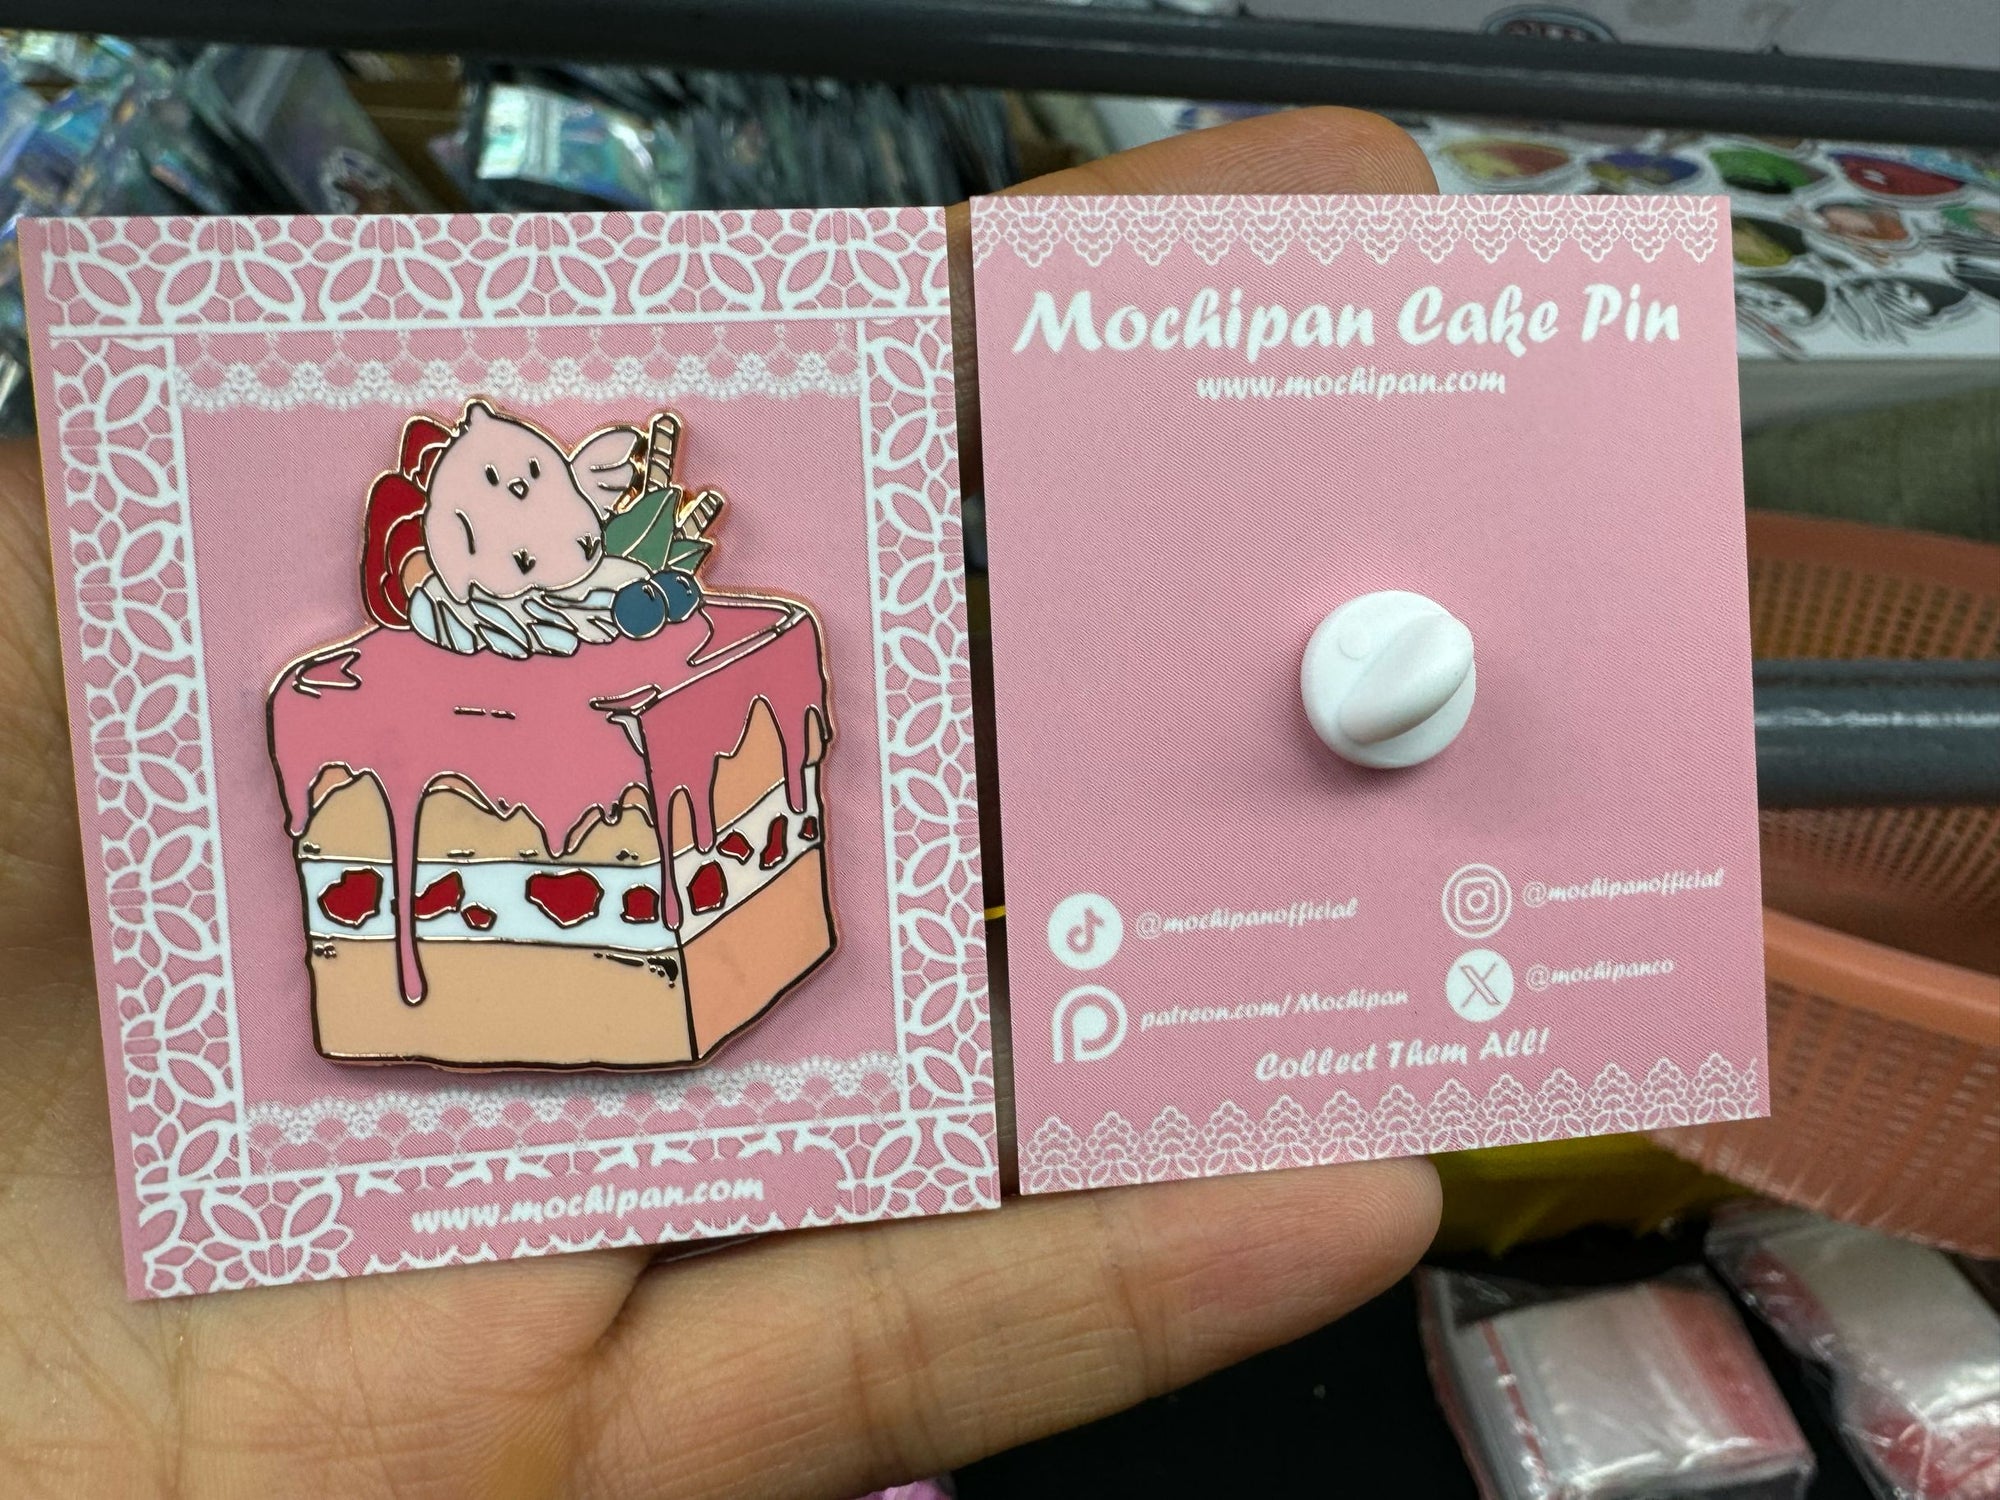 Mochipan Cake Pin (Original)